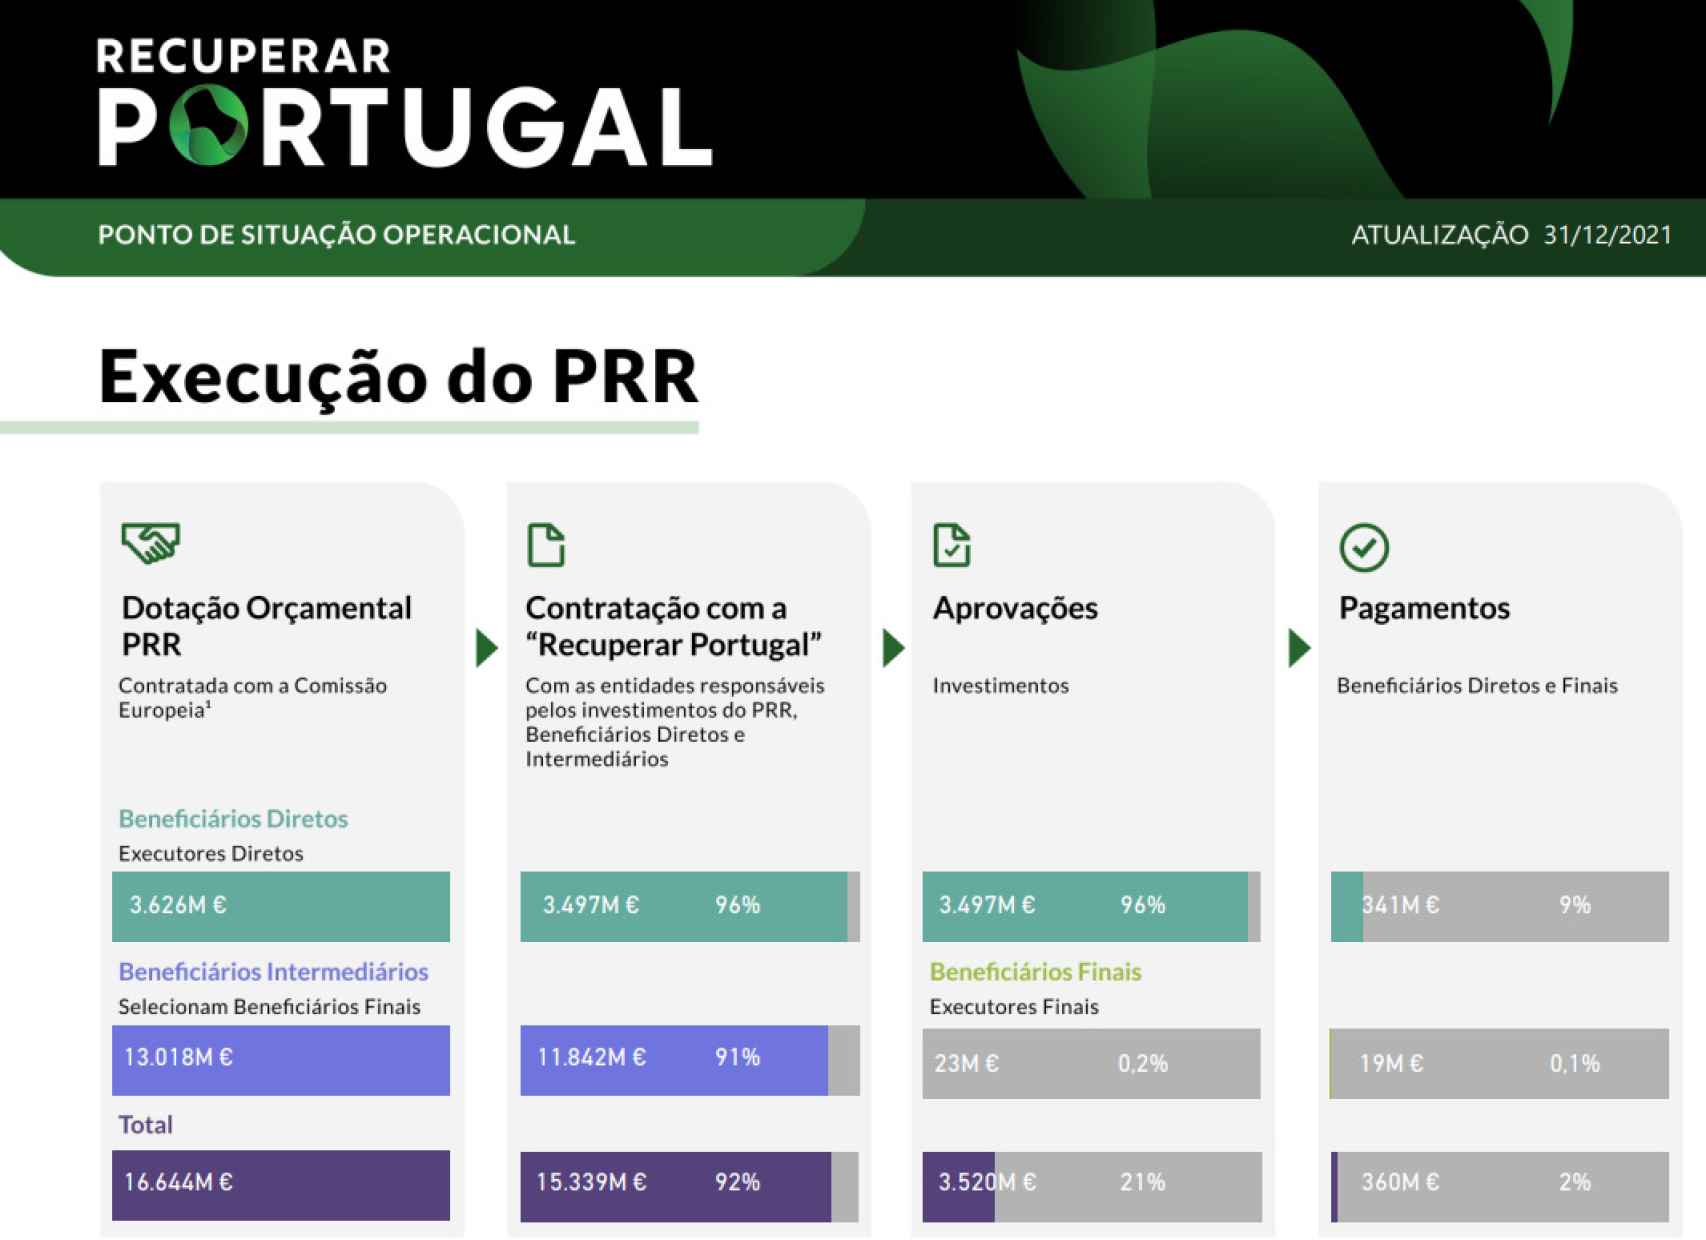 Fuente: Recuperar Portugal.